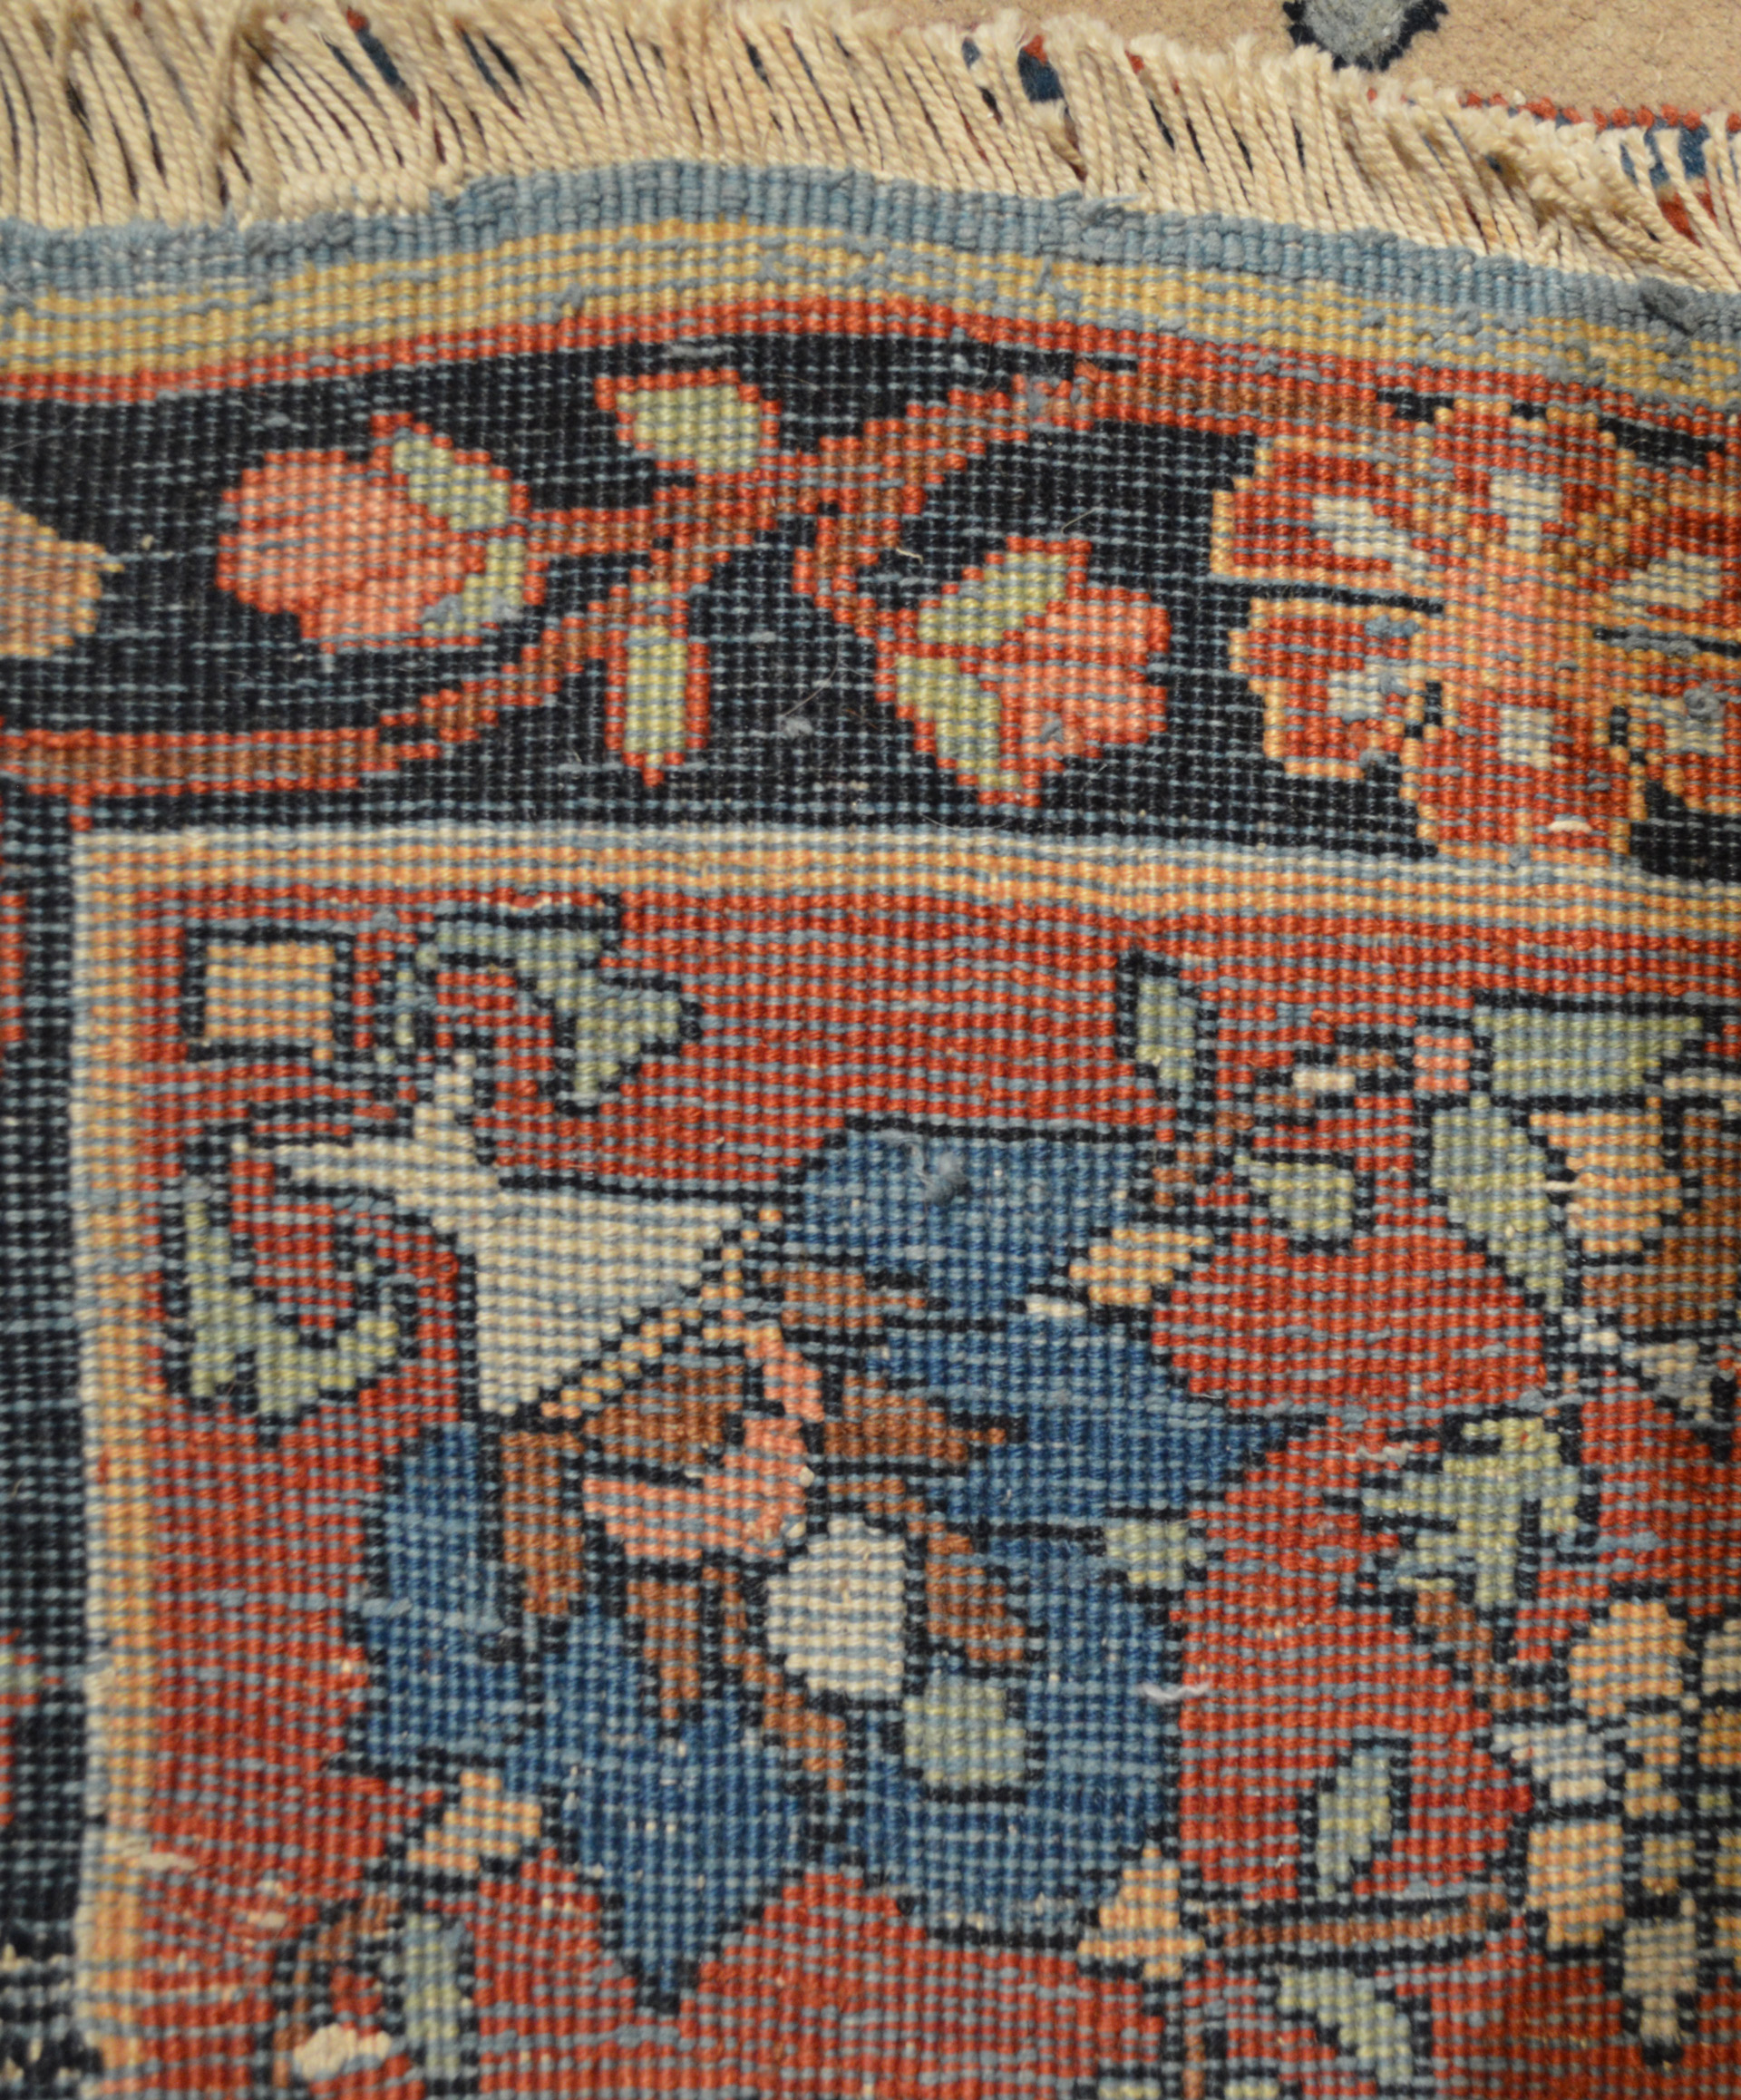 Weave of an antique Persian Sarouk or Tabriz rug, circa 1925 - Douglas Stock Gallery, Boston,MA area antique Oriental rugs